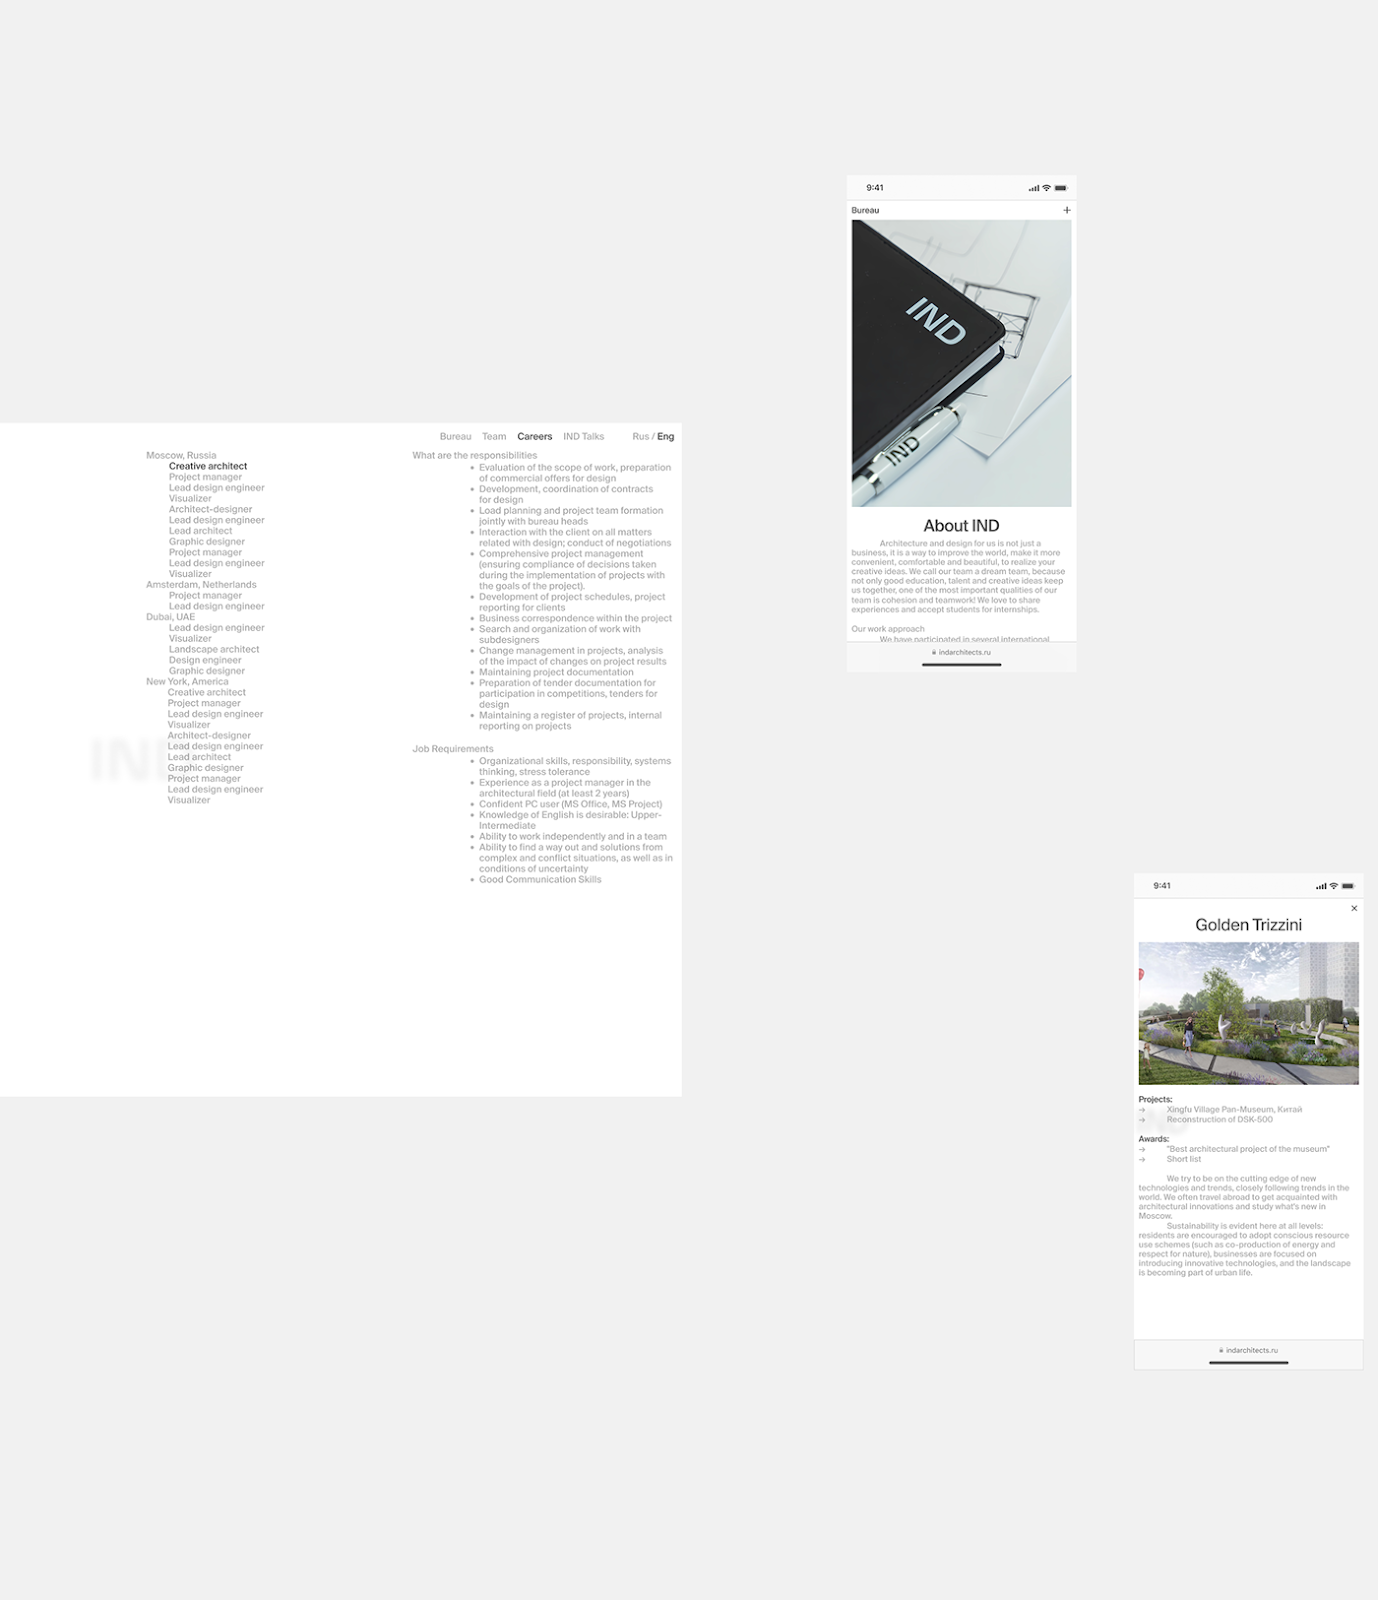 Artifact from the IND Architects' Sleek Minimalist Web Design Unveiled article on Abduzeedo